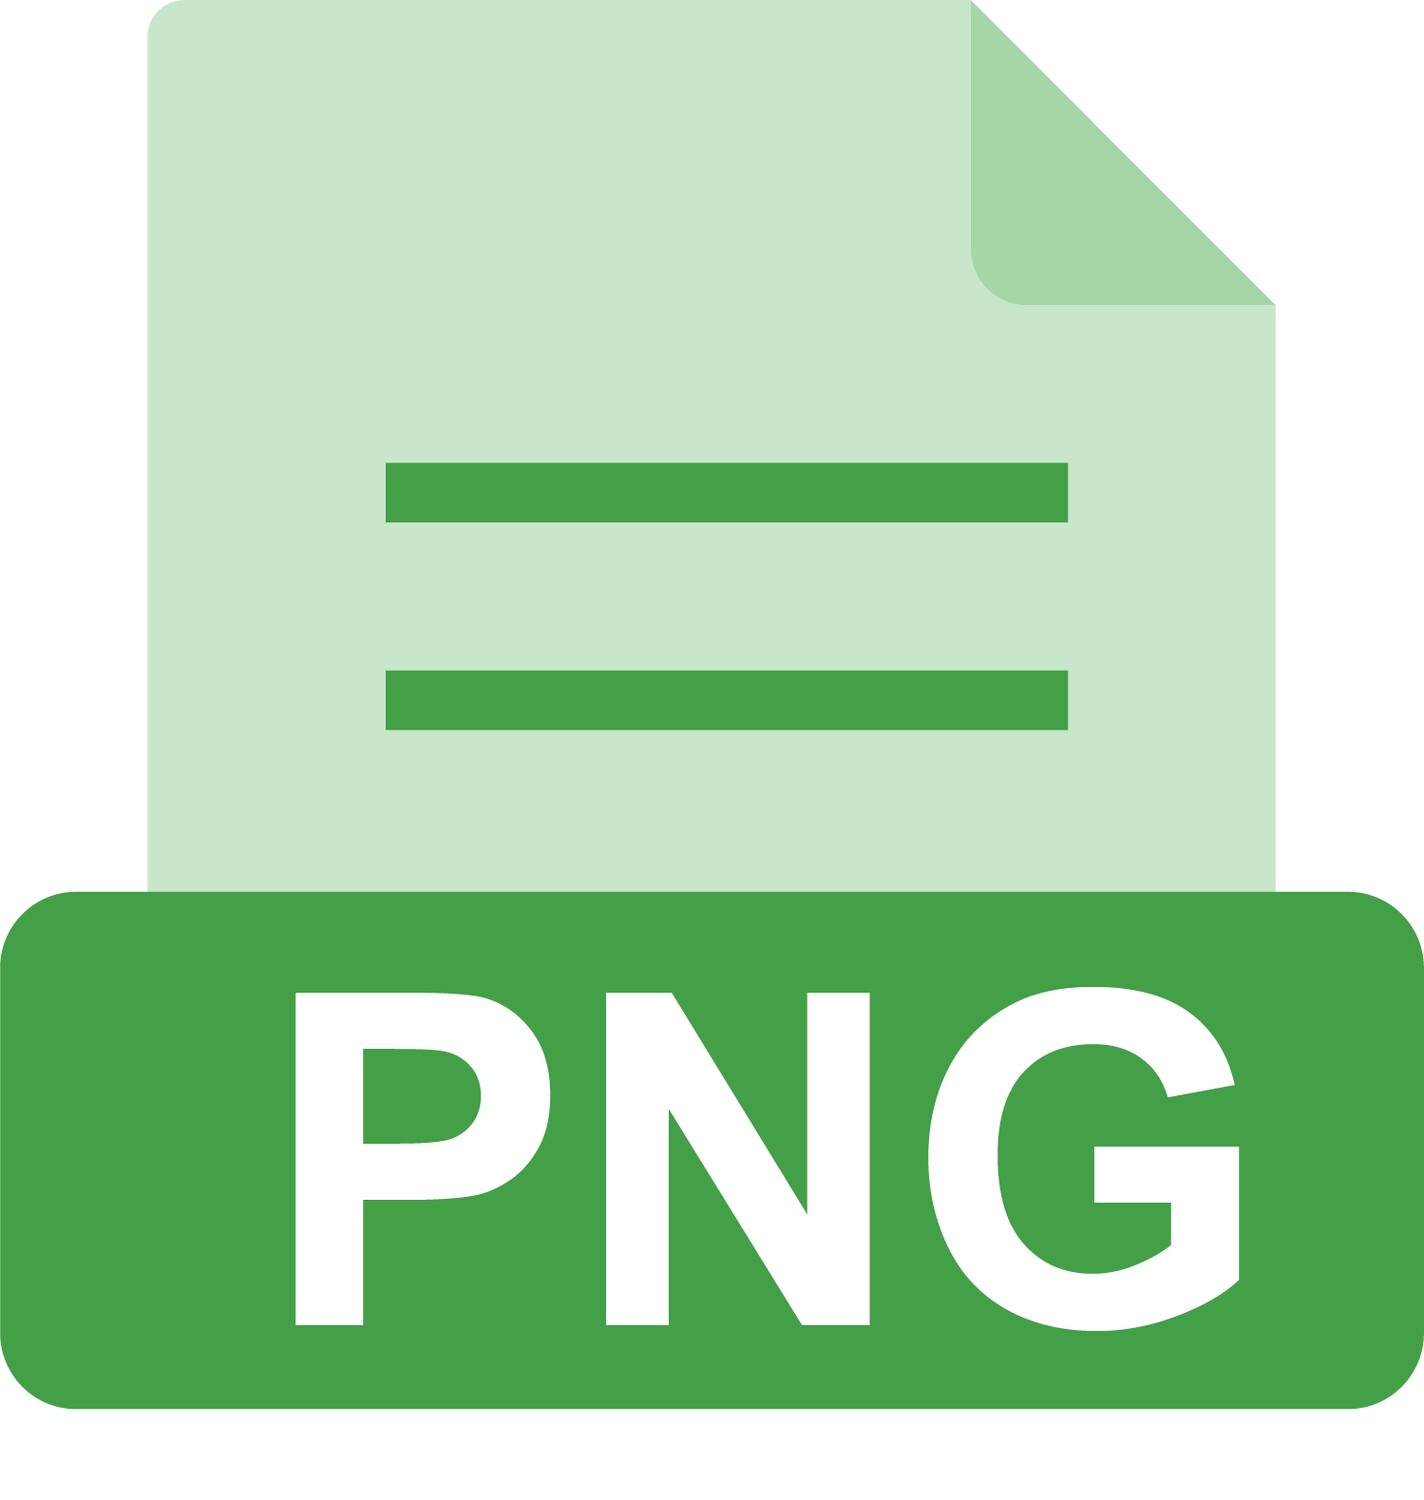 E-File: PNG, Architect Pennsylvania